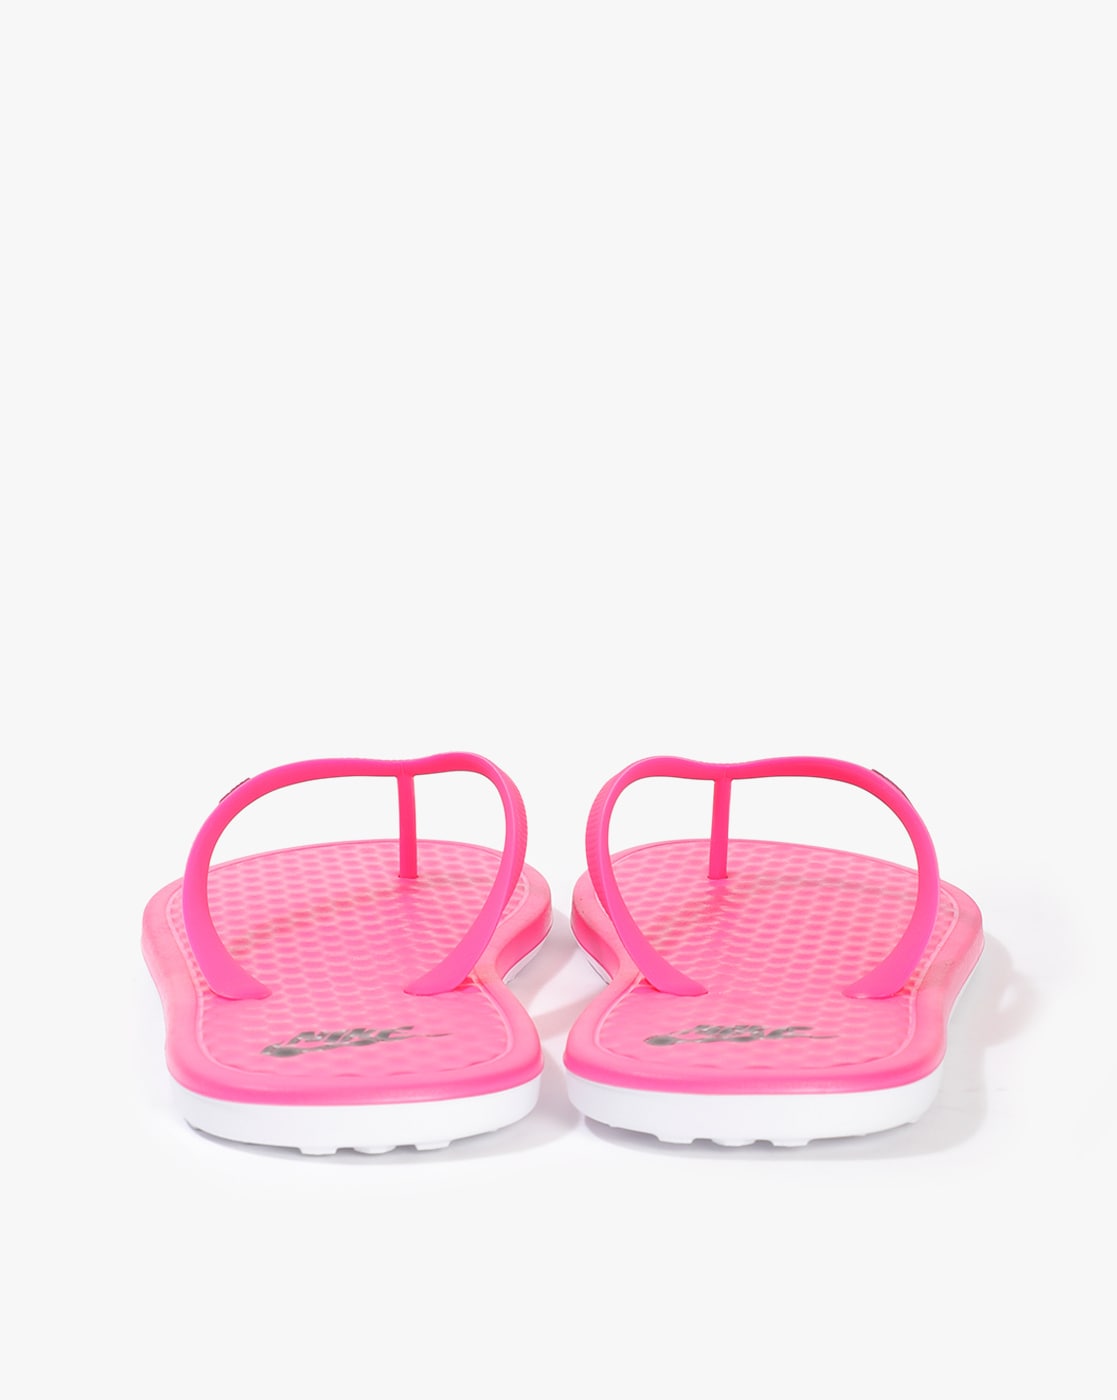 Buy Pink Flip Flop & Slippers for Women by NIKE Online